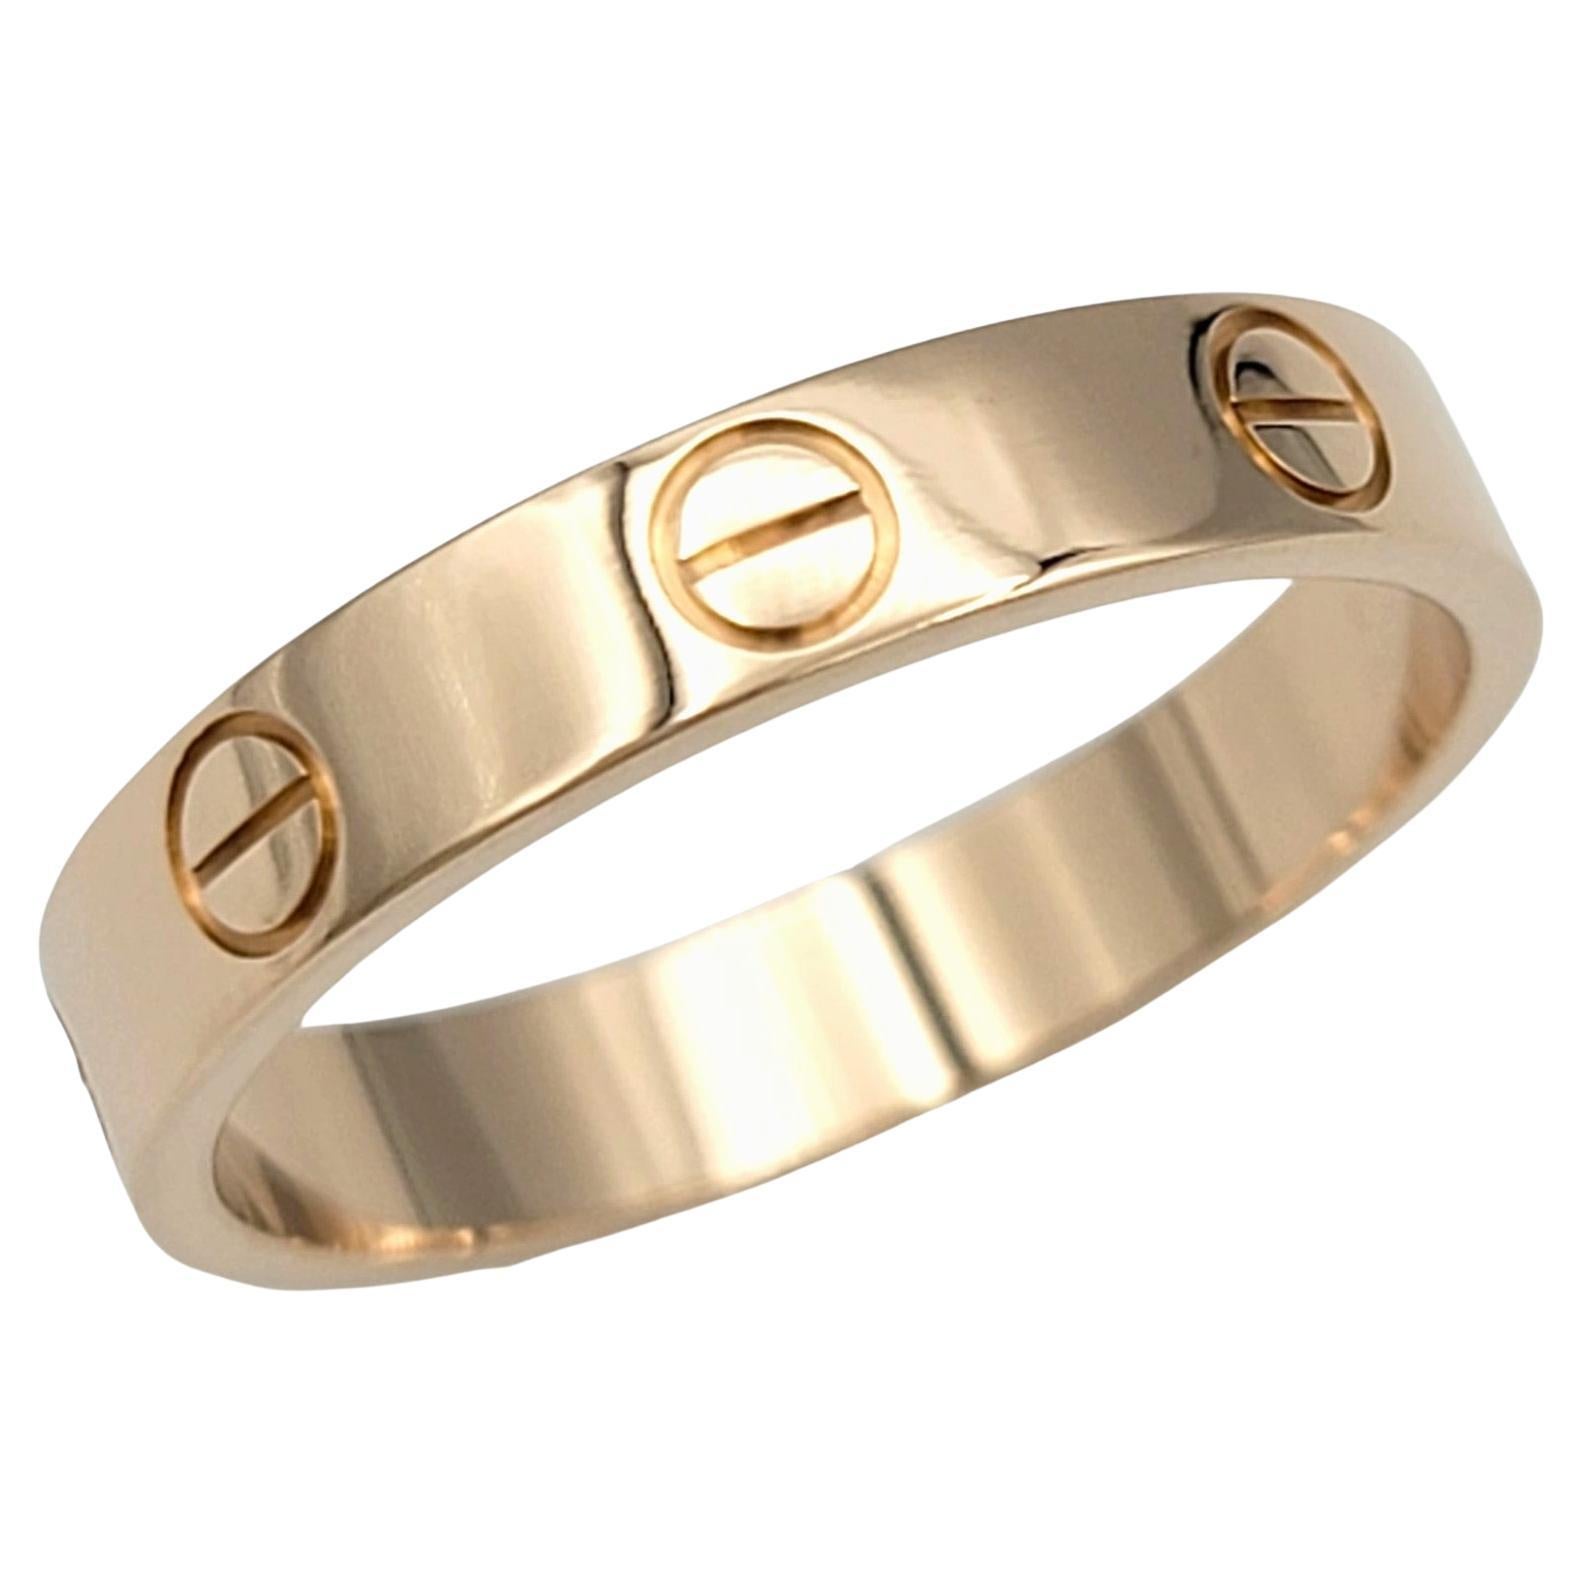 Cartier Love Collection Wedding Band Ring Set in Polished 18 Karat Rose Gold